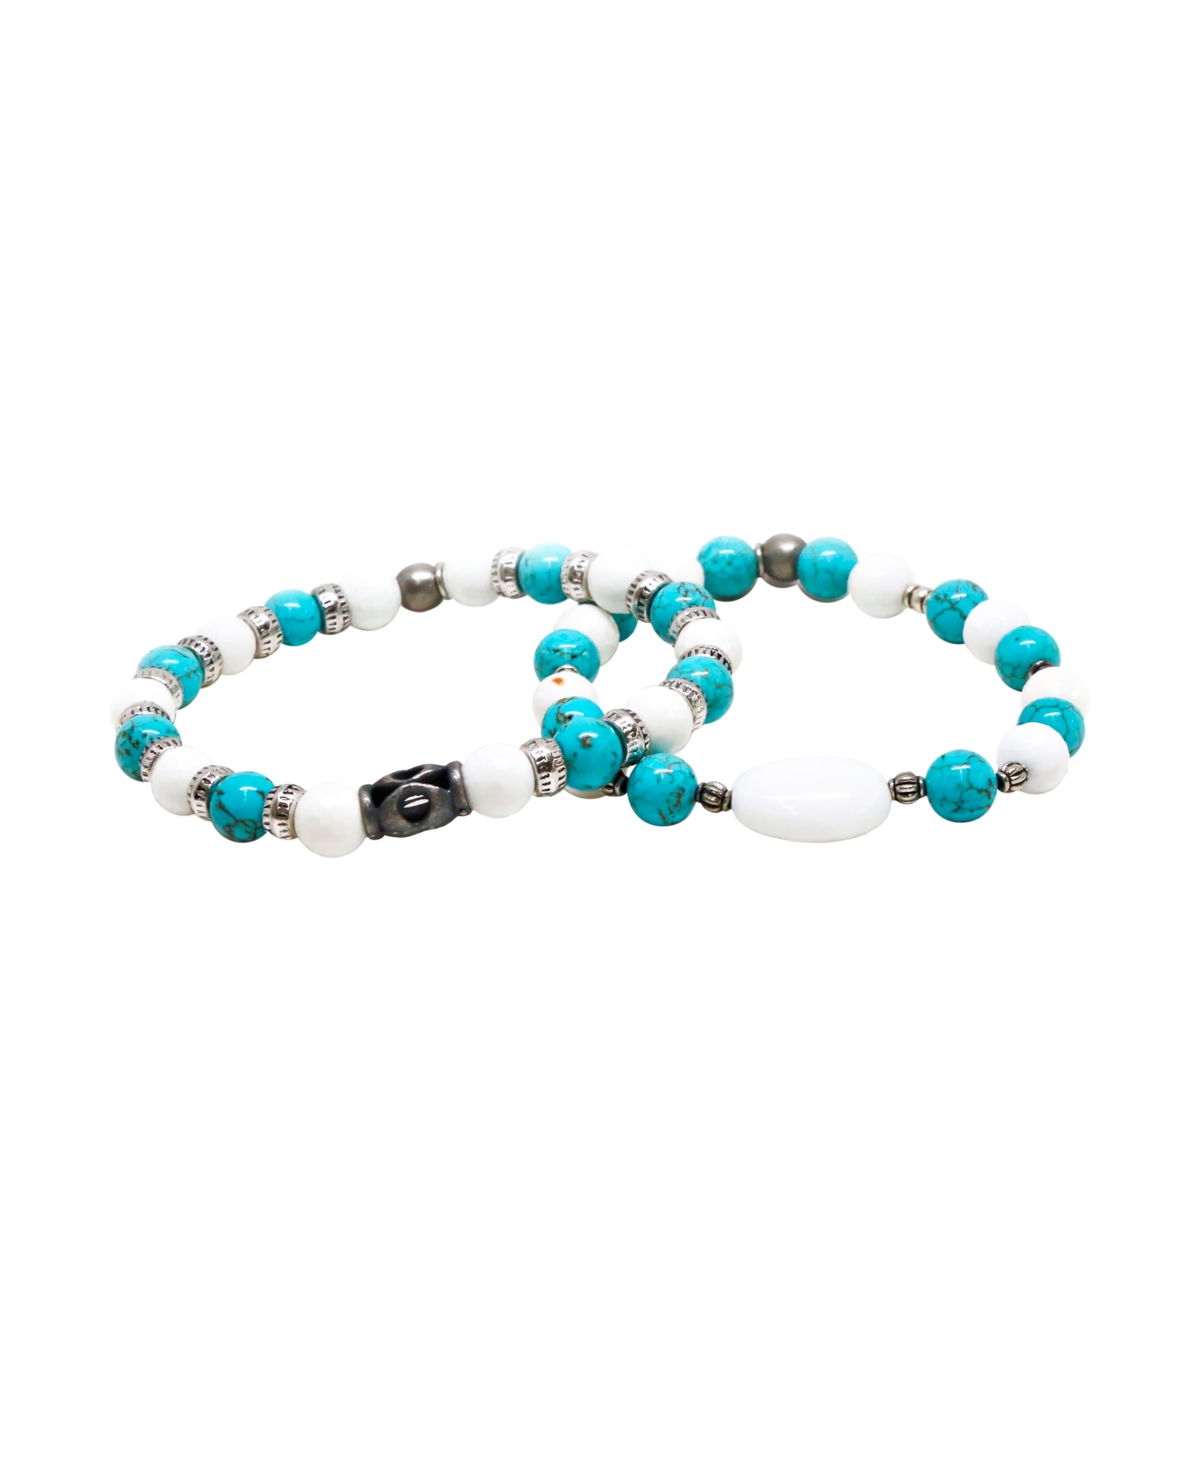 Turquoise and Howlite Beaded Elastic Bracelet, Pack of 2 - Multi